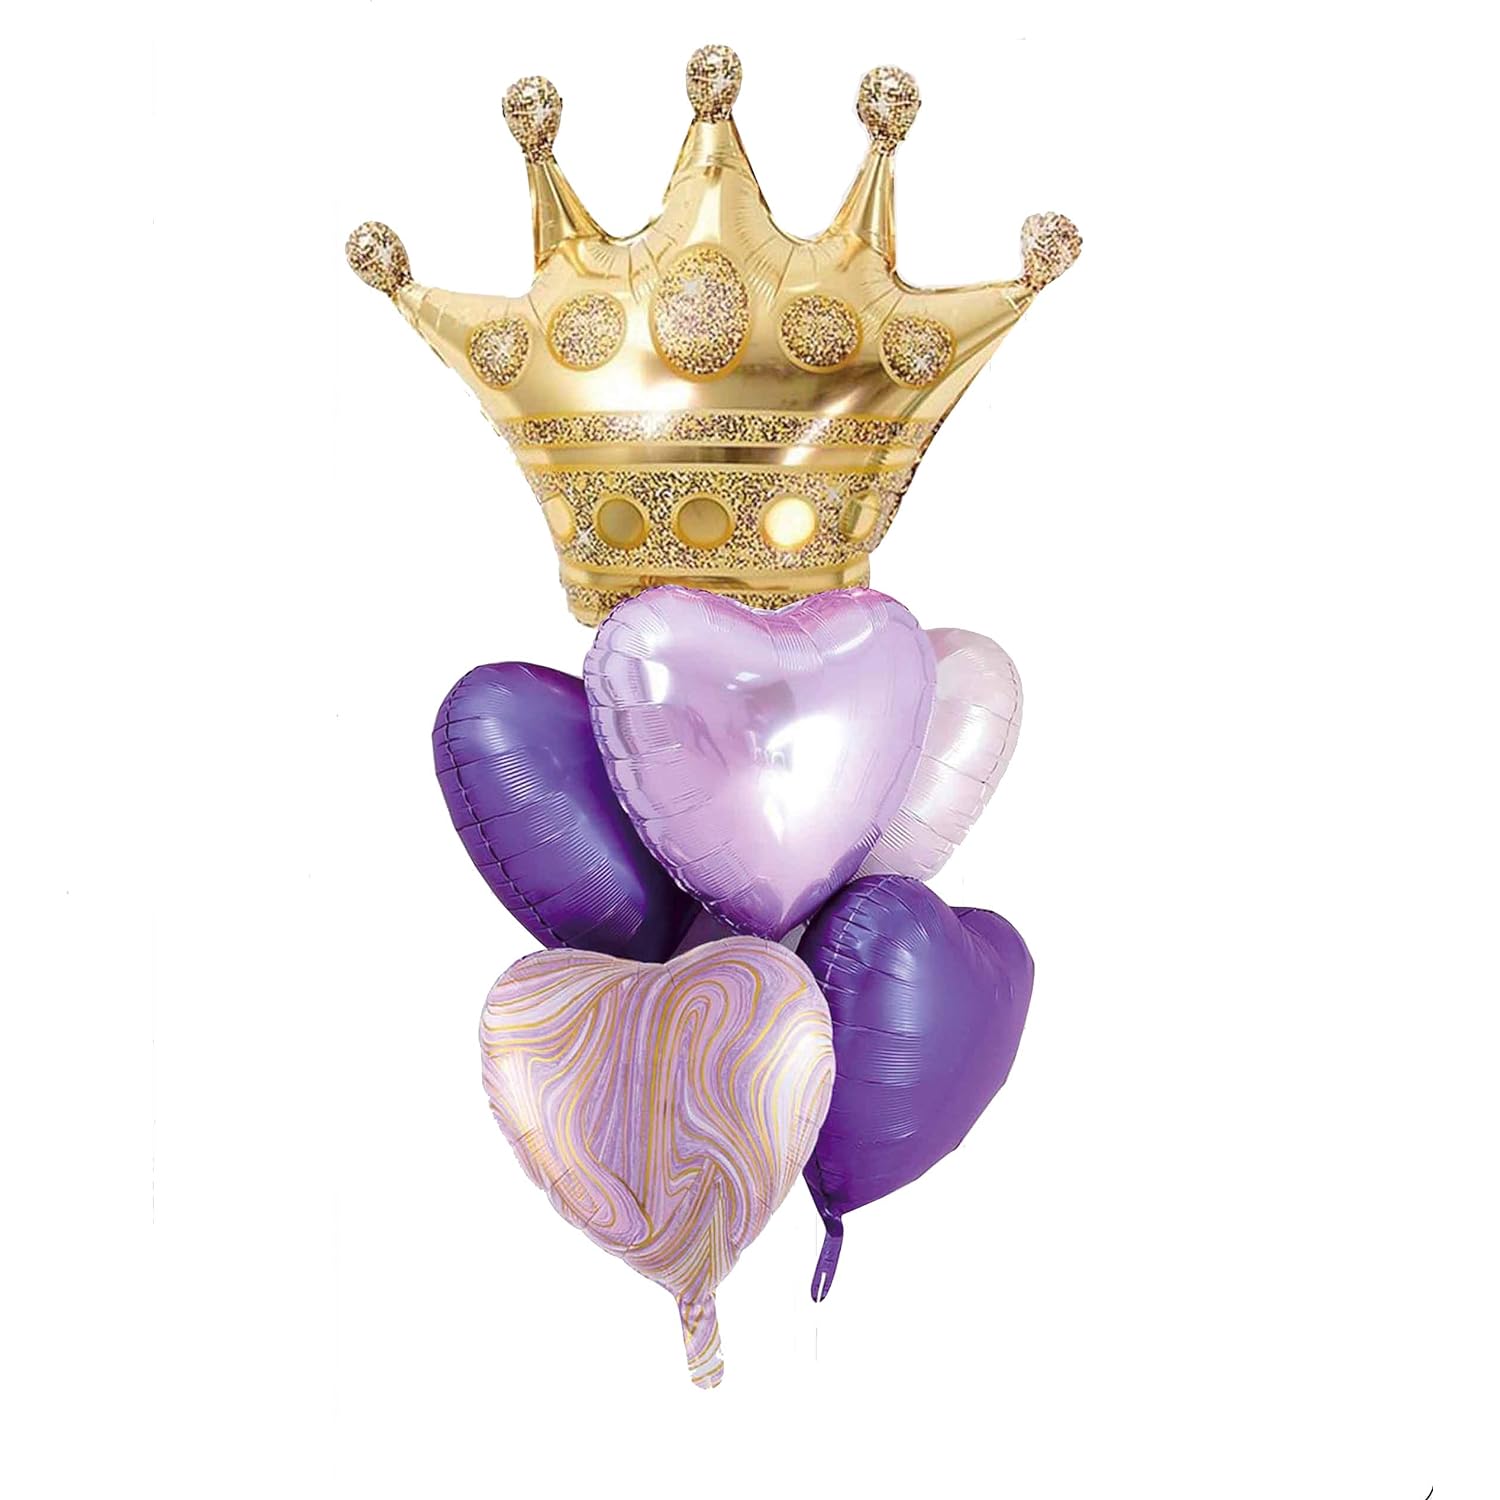 beschermen Emigreren les Great Choice Products Purple Heart Gold Crown Balloons Pack Of 6 Foil  Helium Mylar Balloons ,Metallic